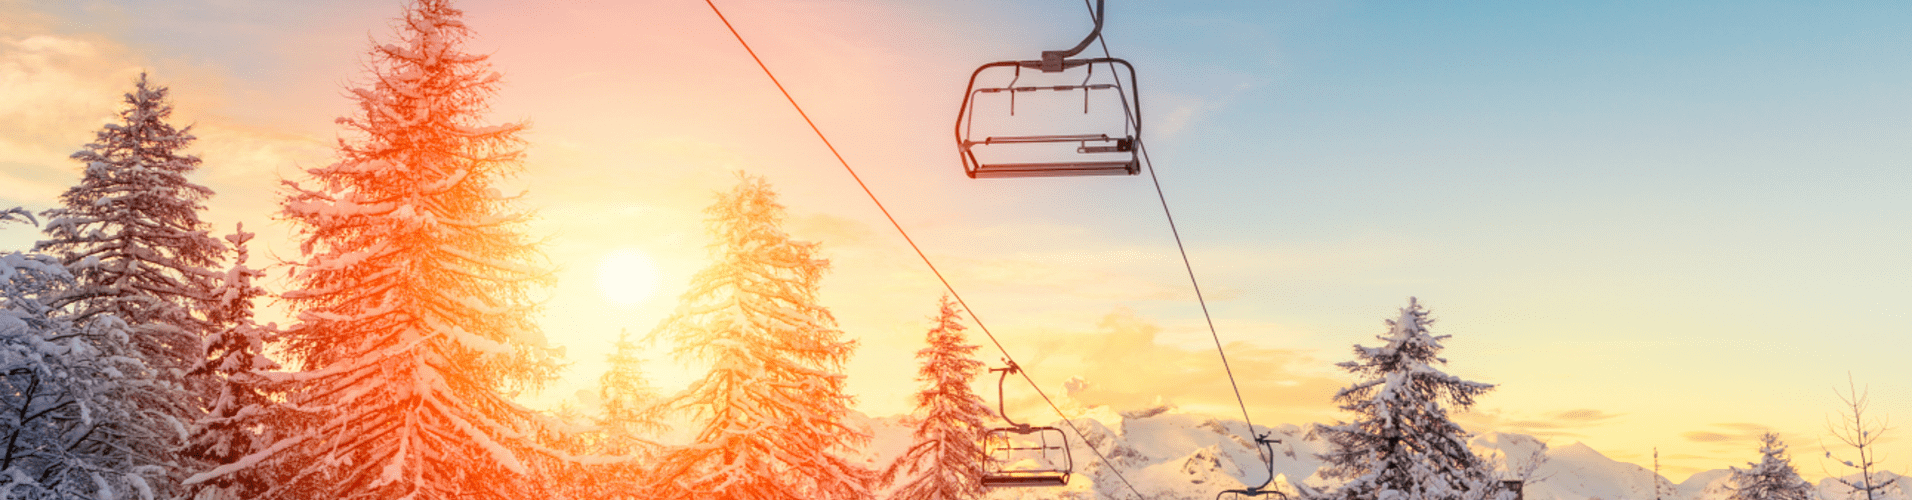 Ski-Lift-French-Alps-Sunset